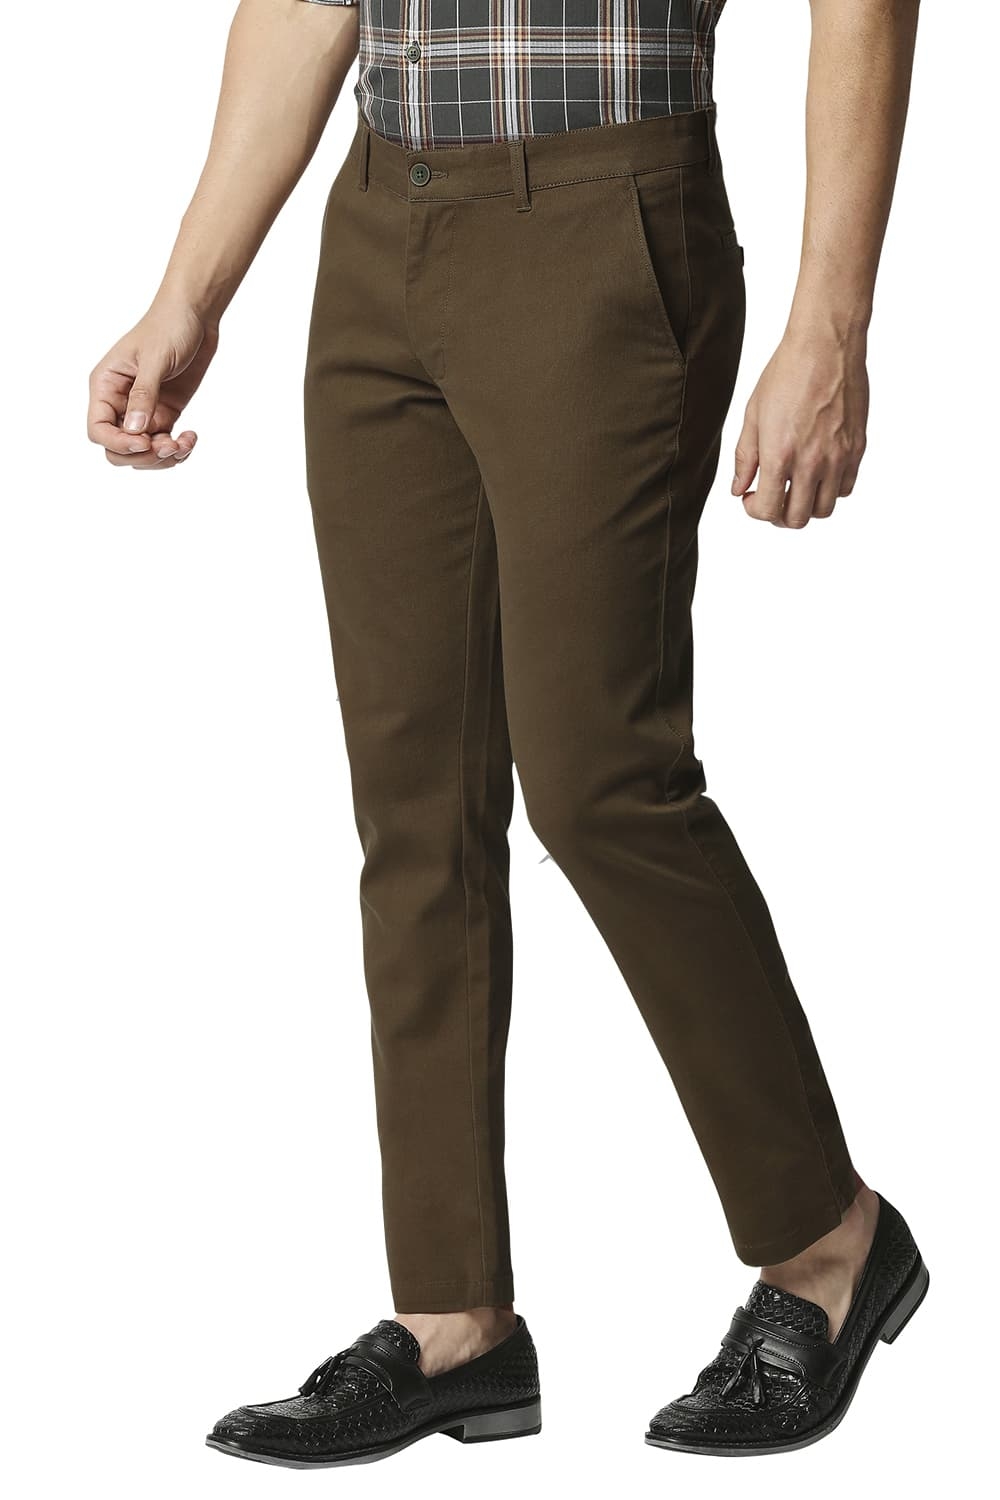 Basics | Men's Dark Brown Cotton Blend Solid Trouser 3